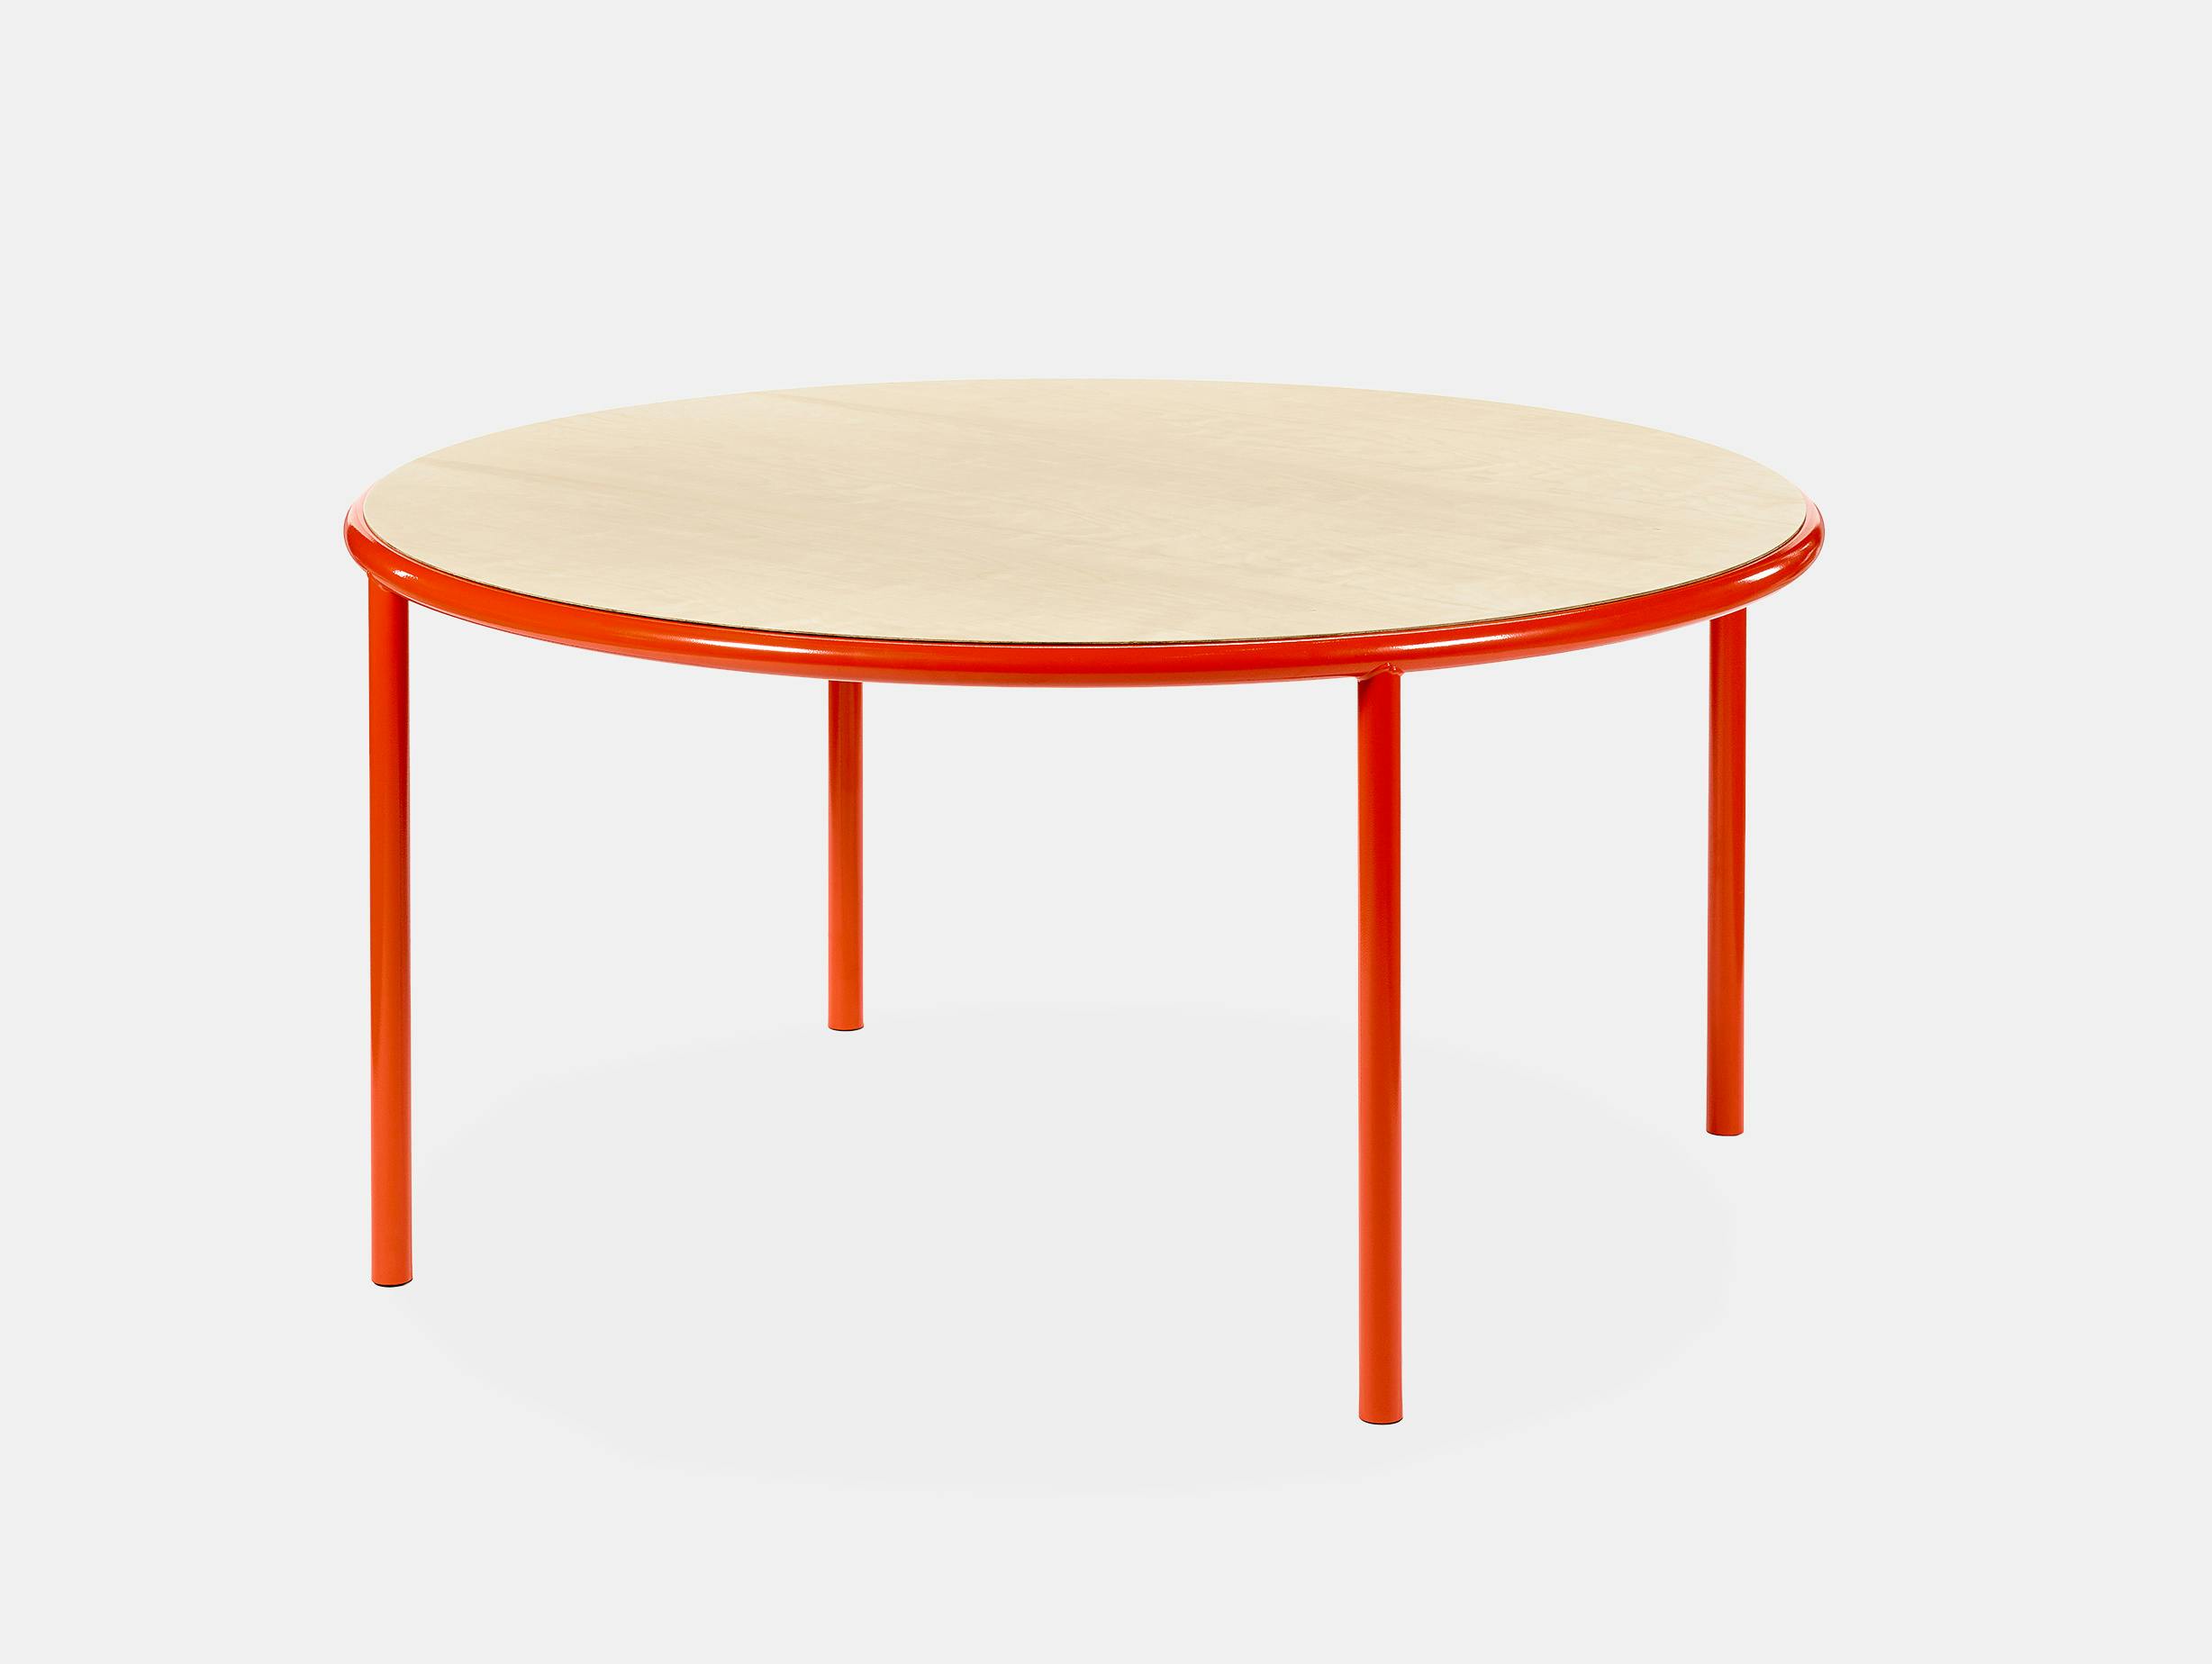 Muller van severen wooden table large round red birch